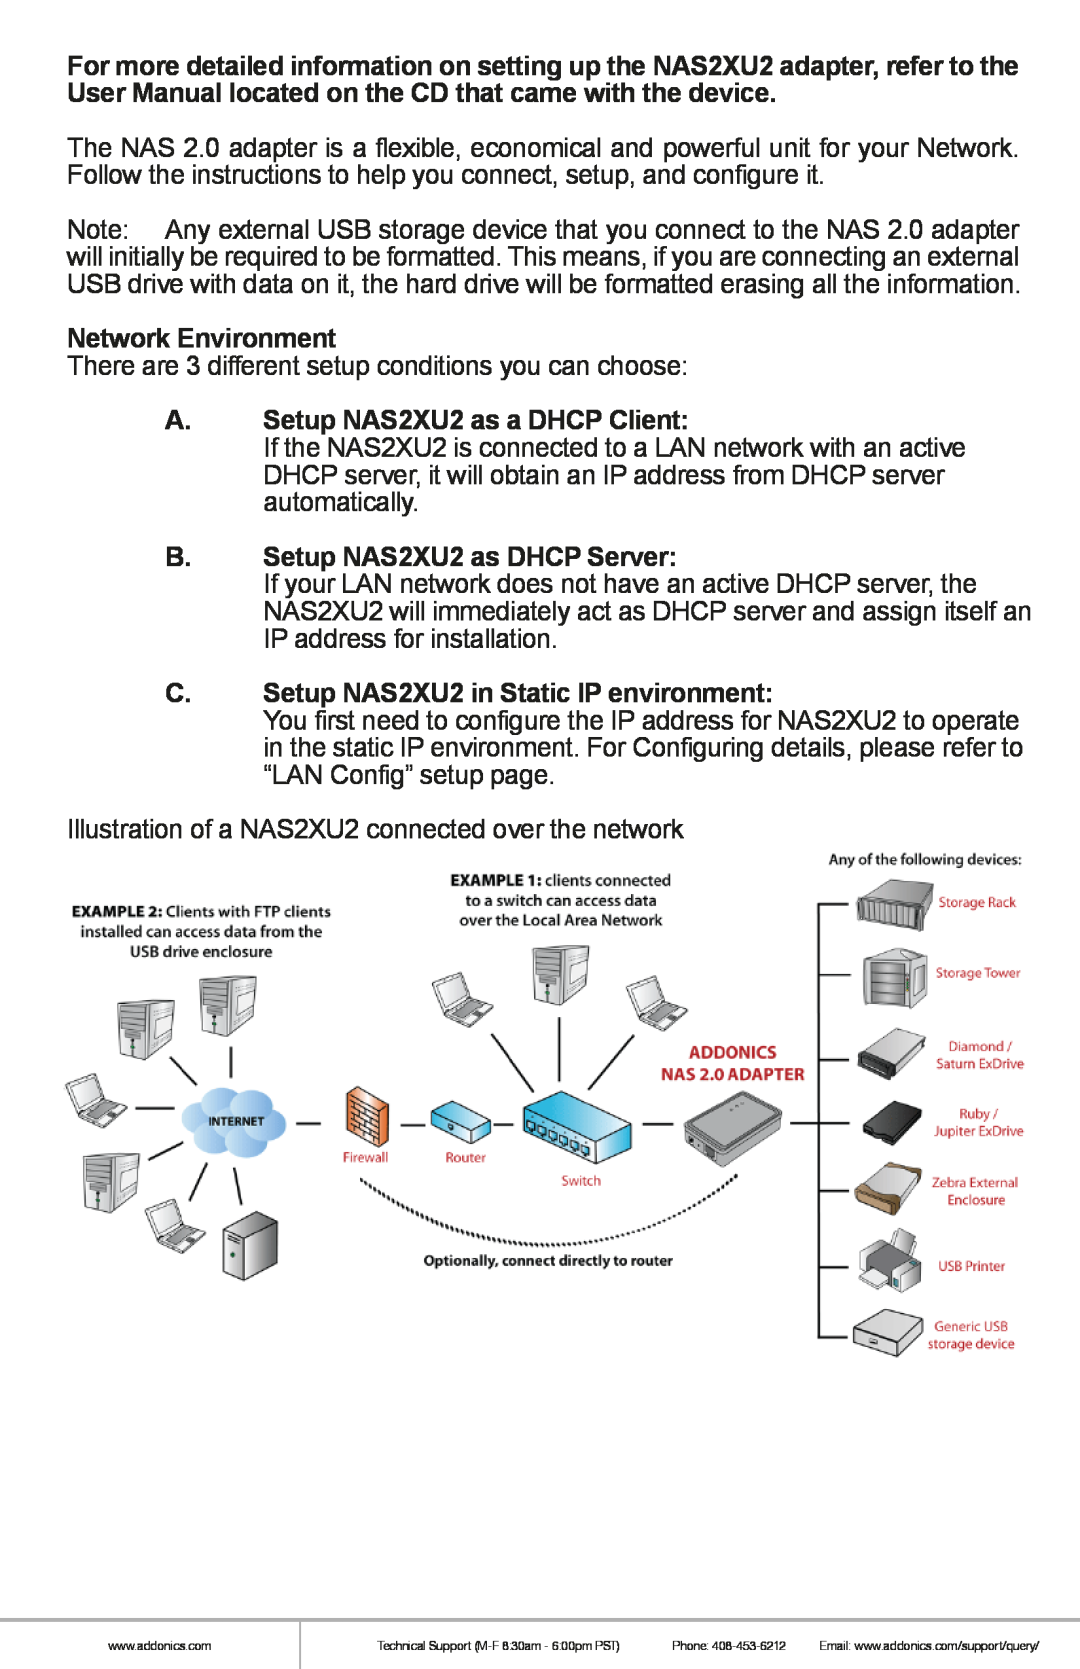 Addonics Technologies manual Network Environment, A. Setup NAS2XU2 as a DHCP Client, B. Setup NAS2XU2 as DHCP Server 